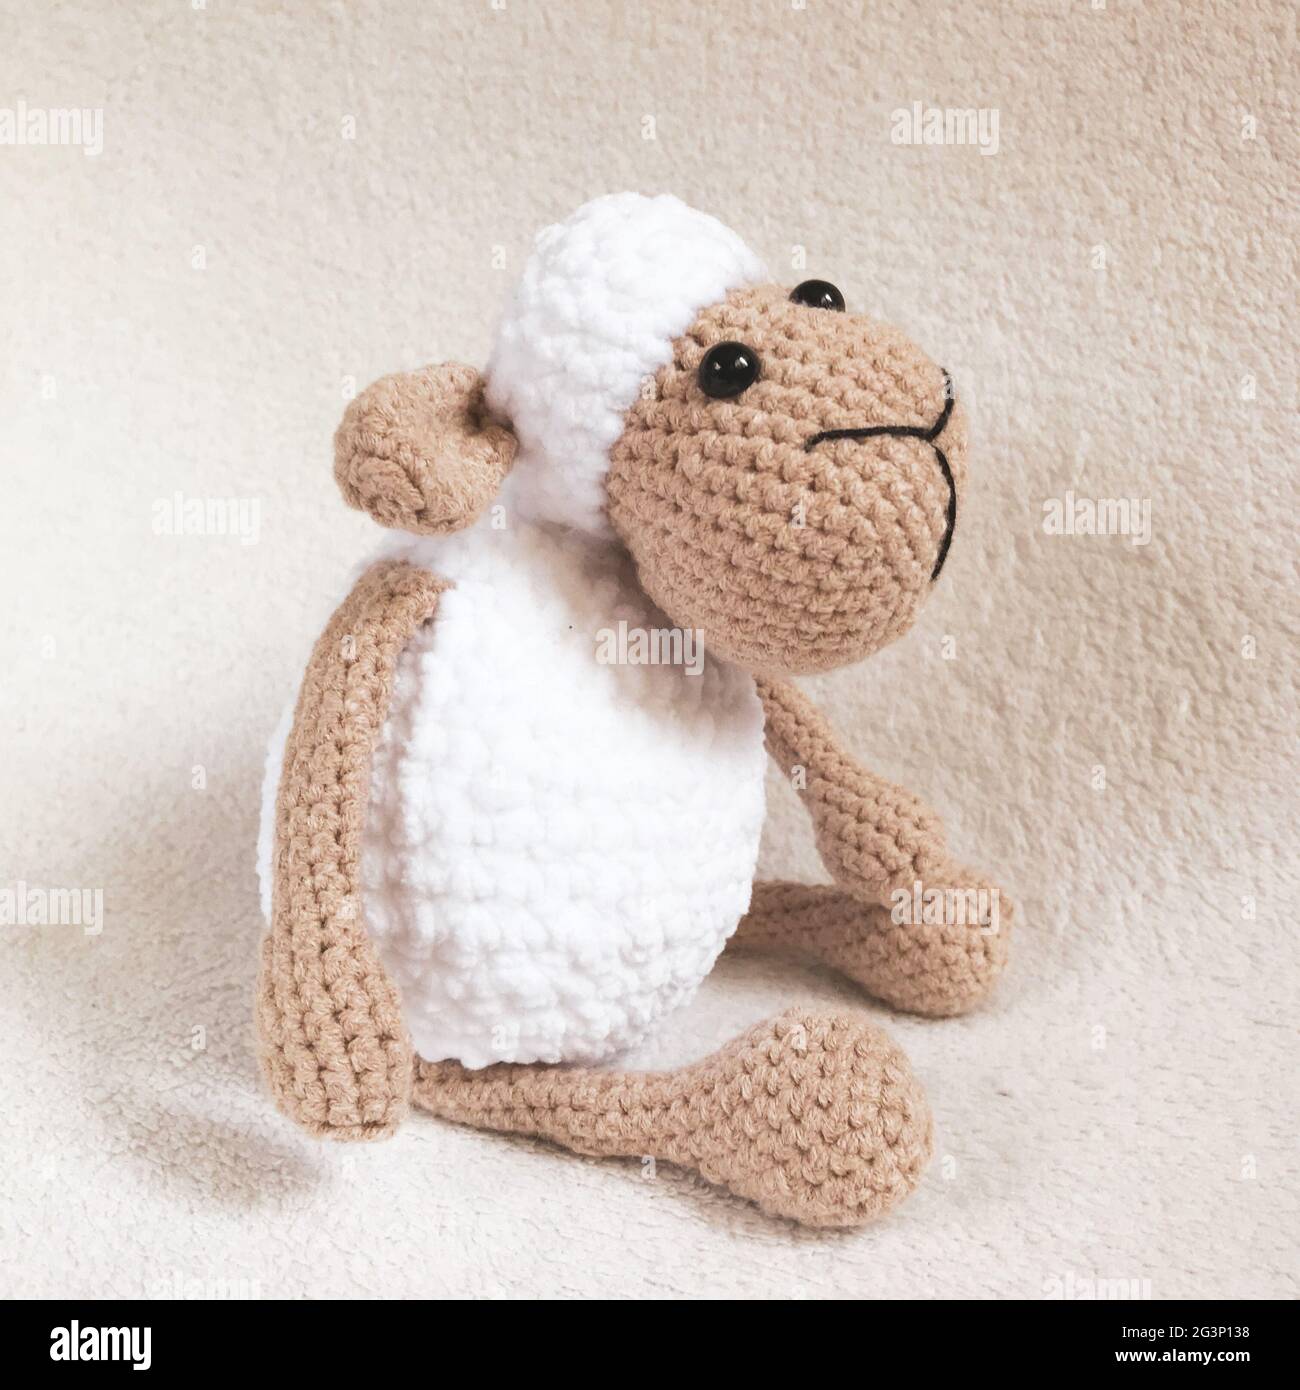 Handmade Crochet Animal Toy - Amigurumi Stuffed Toy - Crochet Sheep Toy Sitting Stock Photo